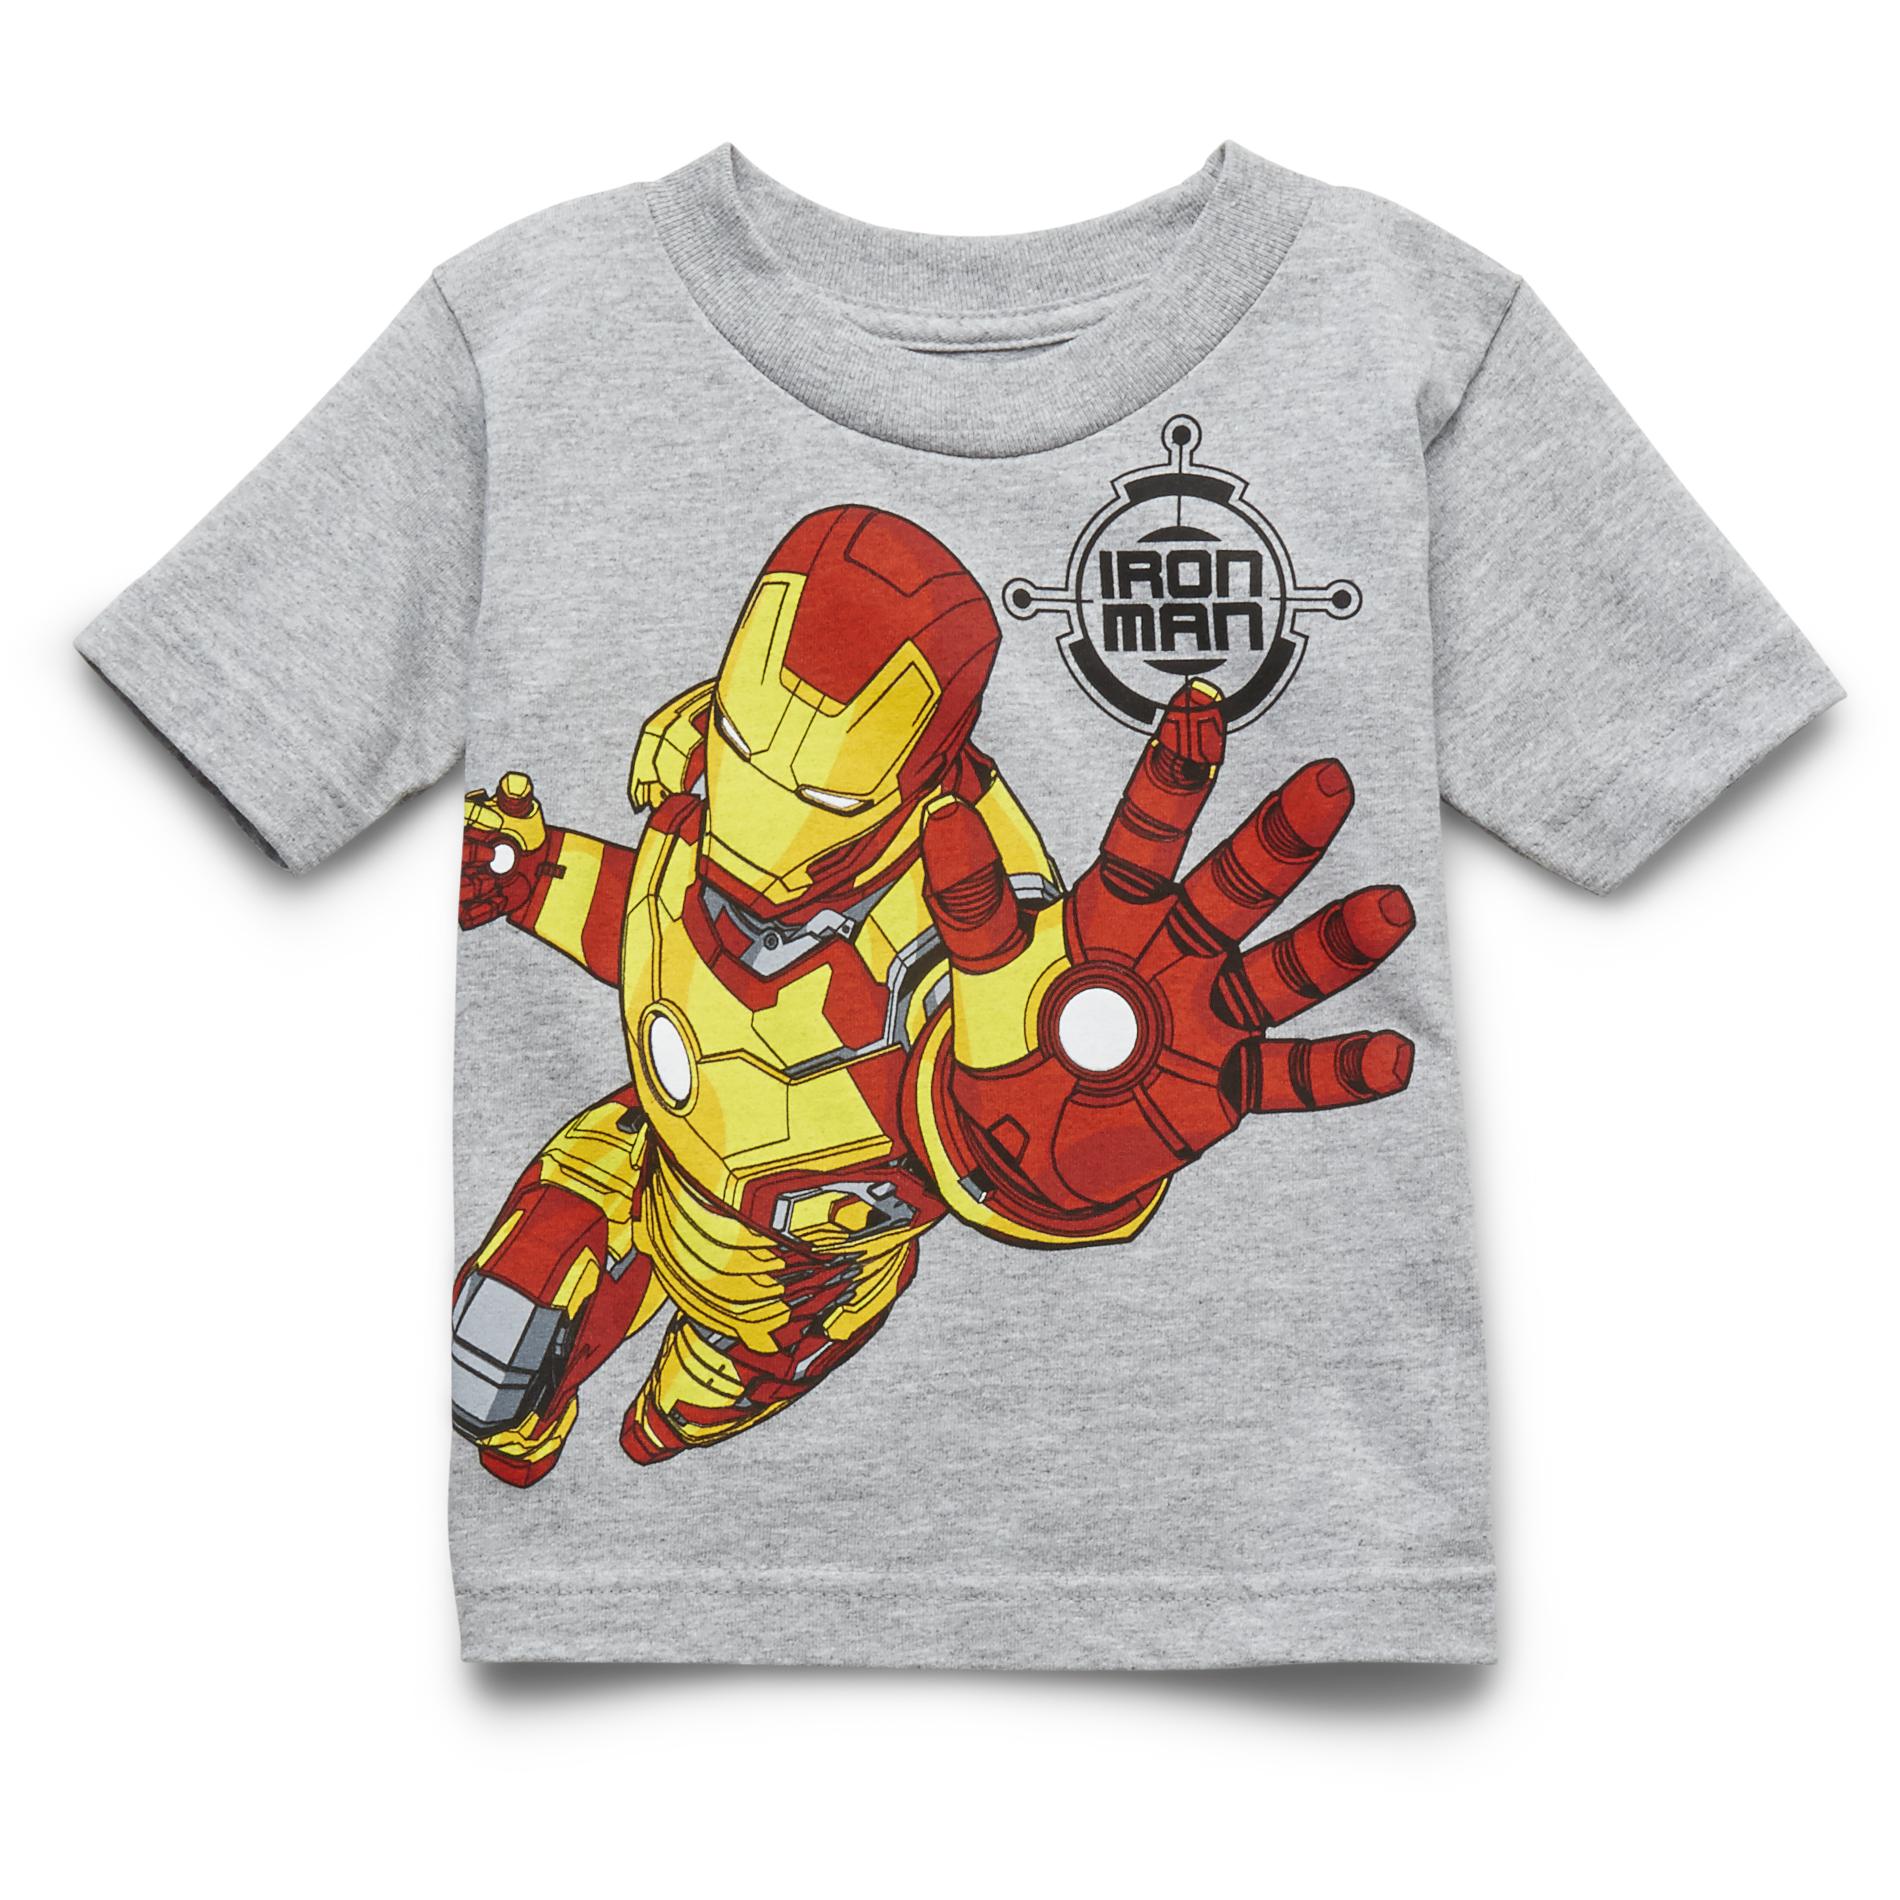 Marvel Toddler Boy's Graphic T-Shirt - Iron Man